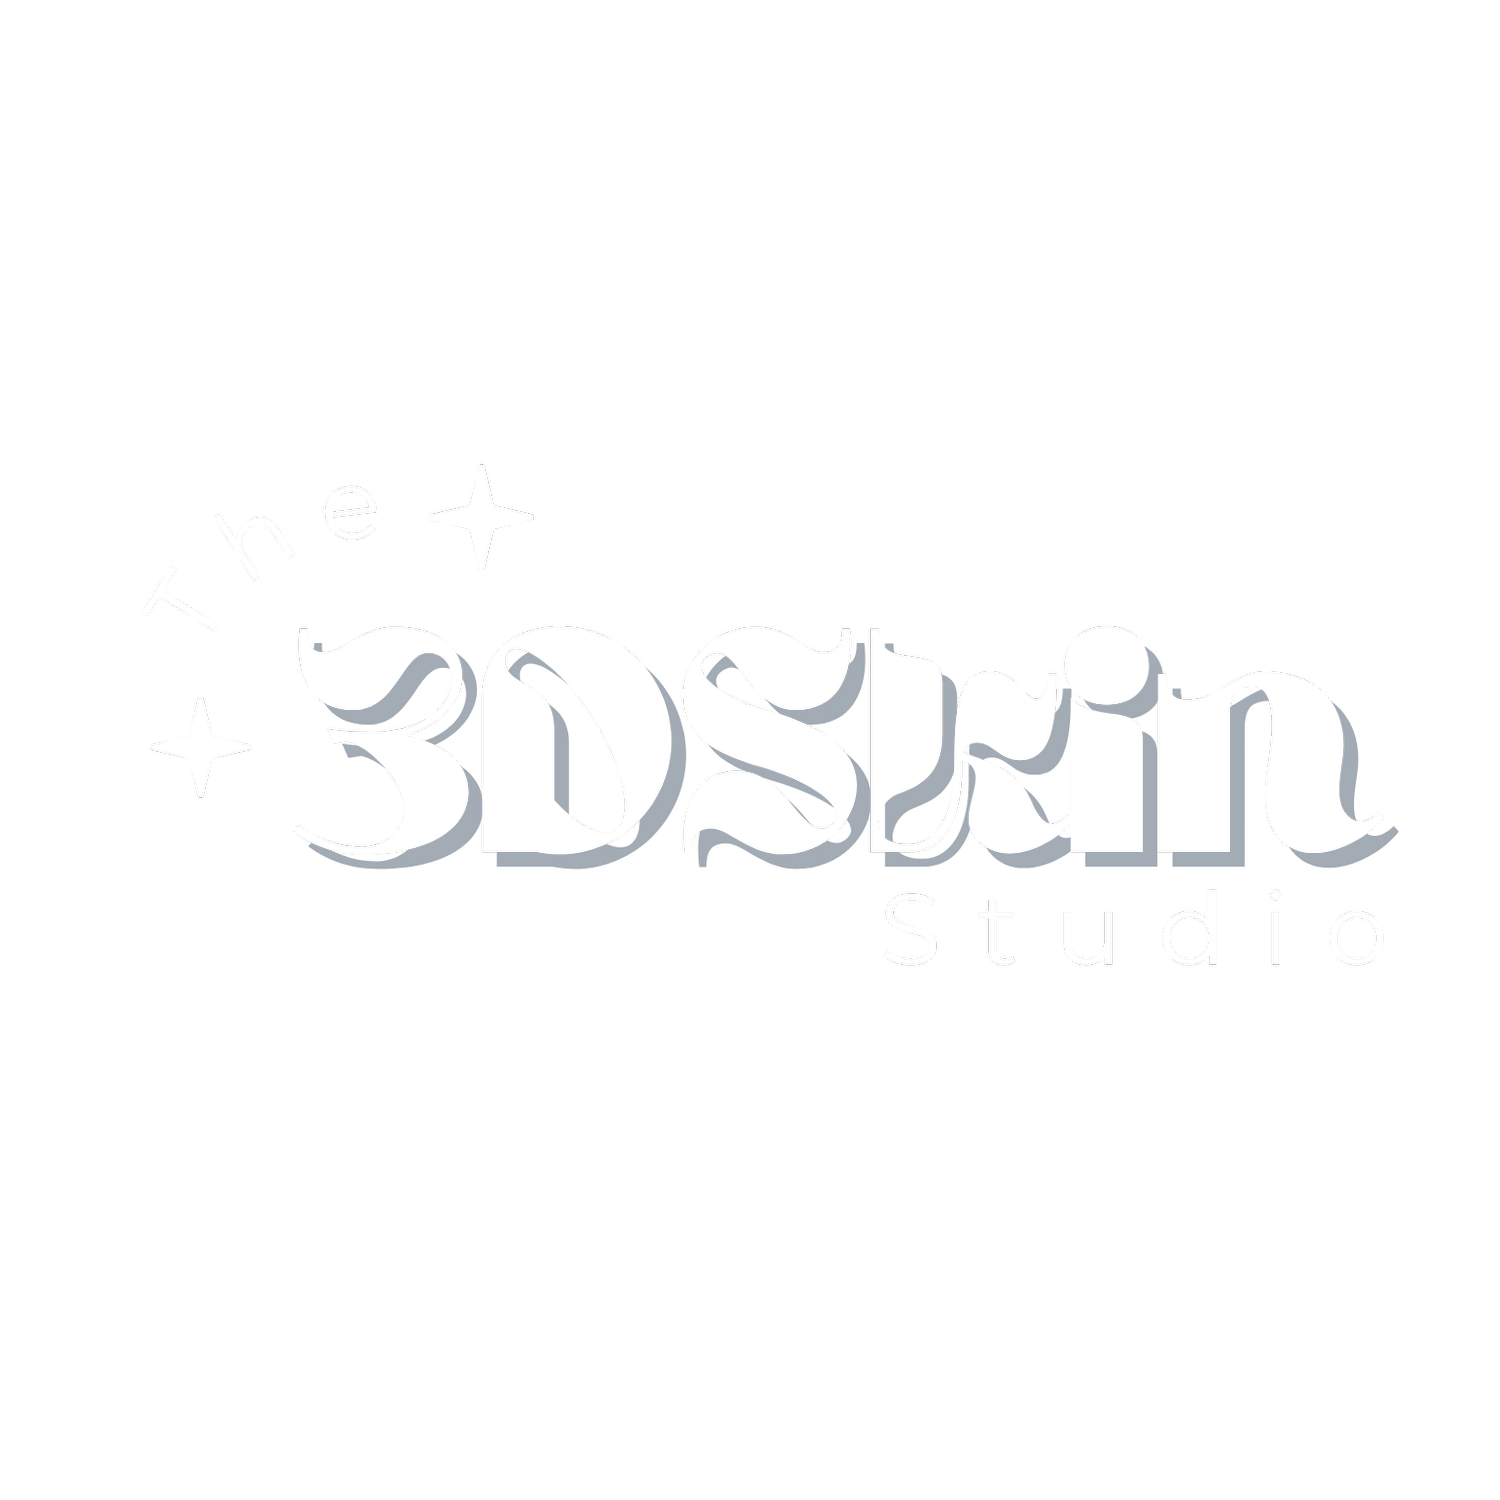 The 3D SKIN STUDIO